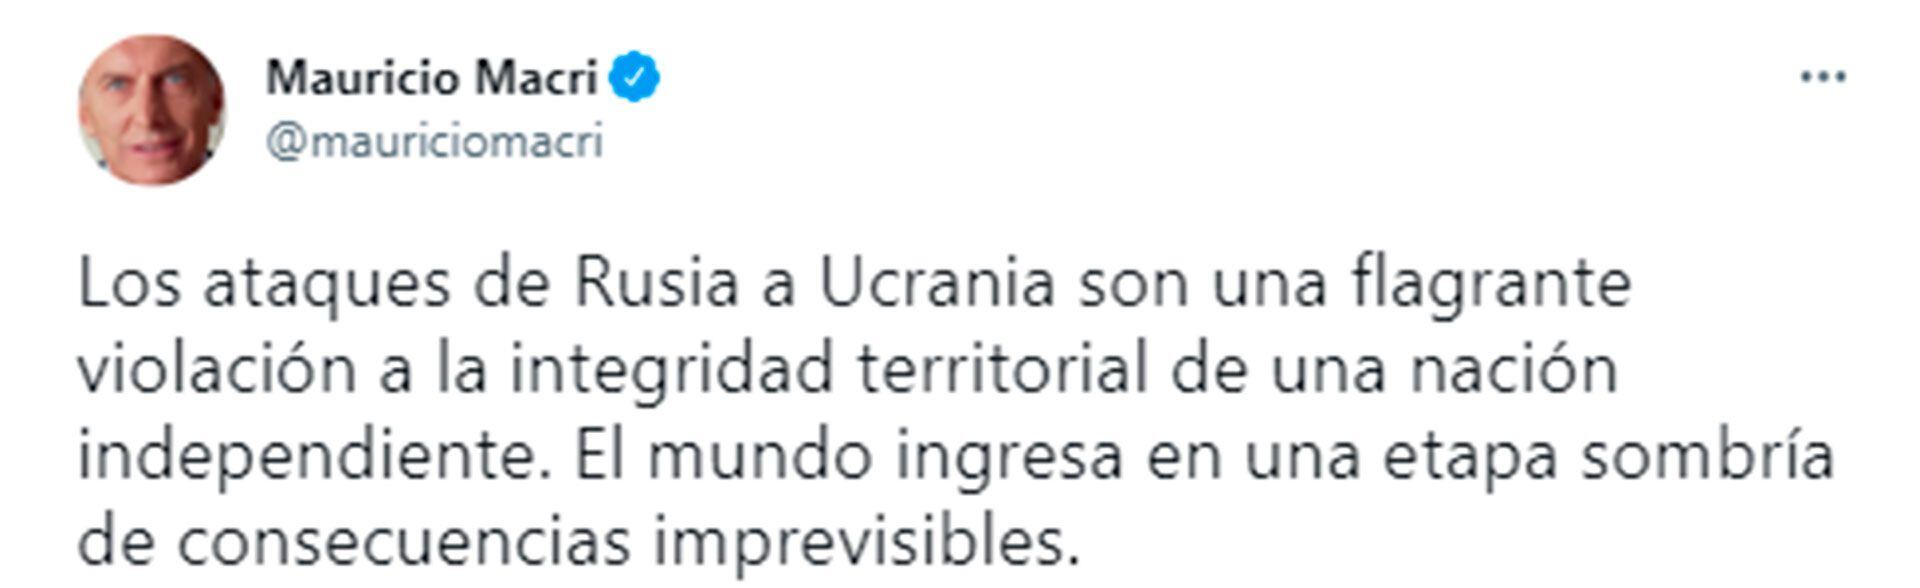 Mauricio Macri condenó el ataque de Rusia a Ucrania